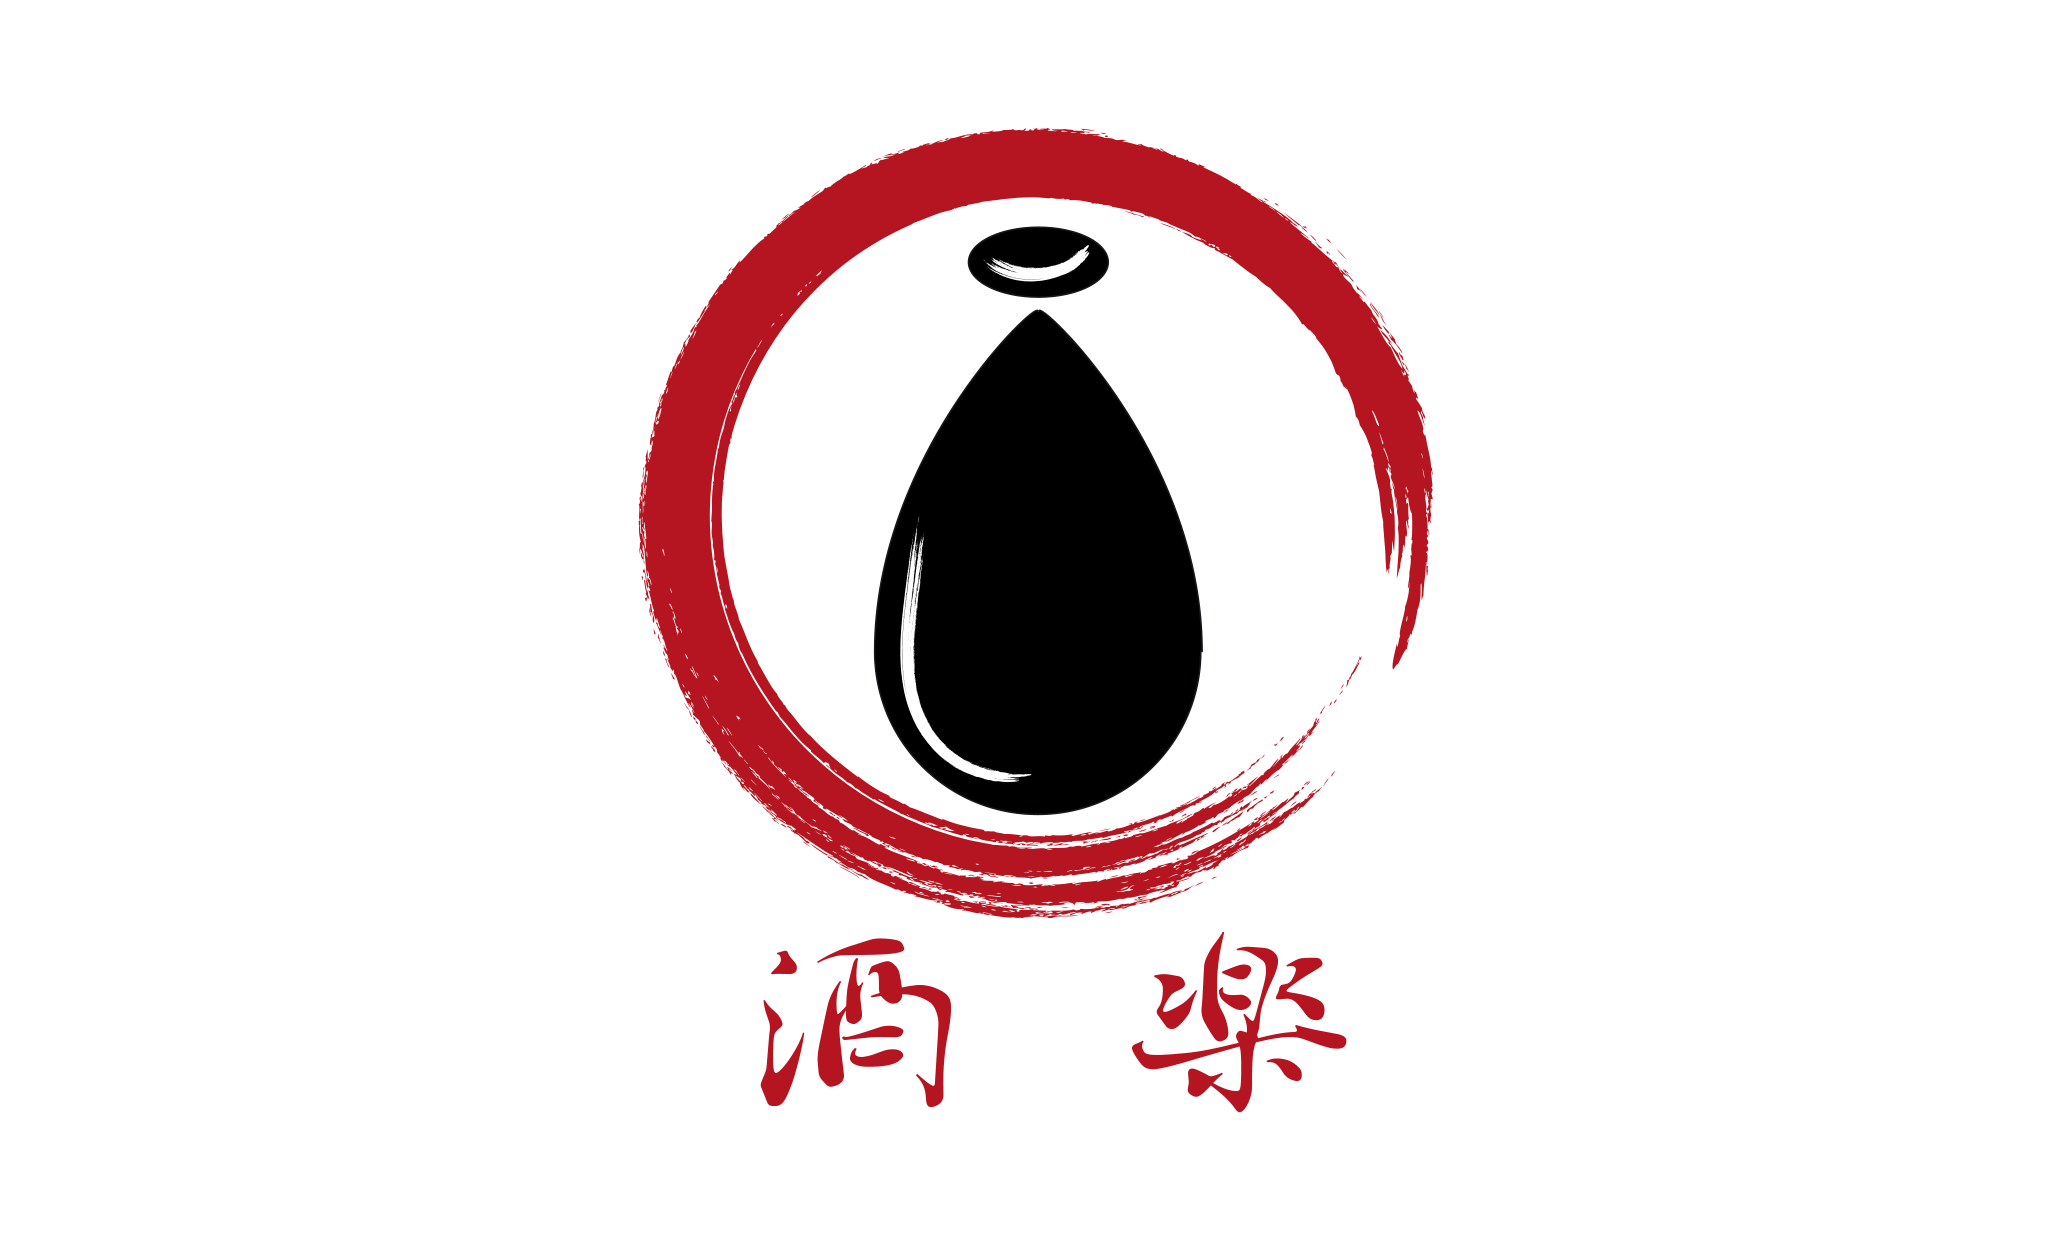 dangelo-Logo